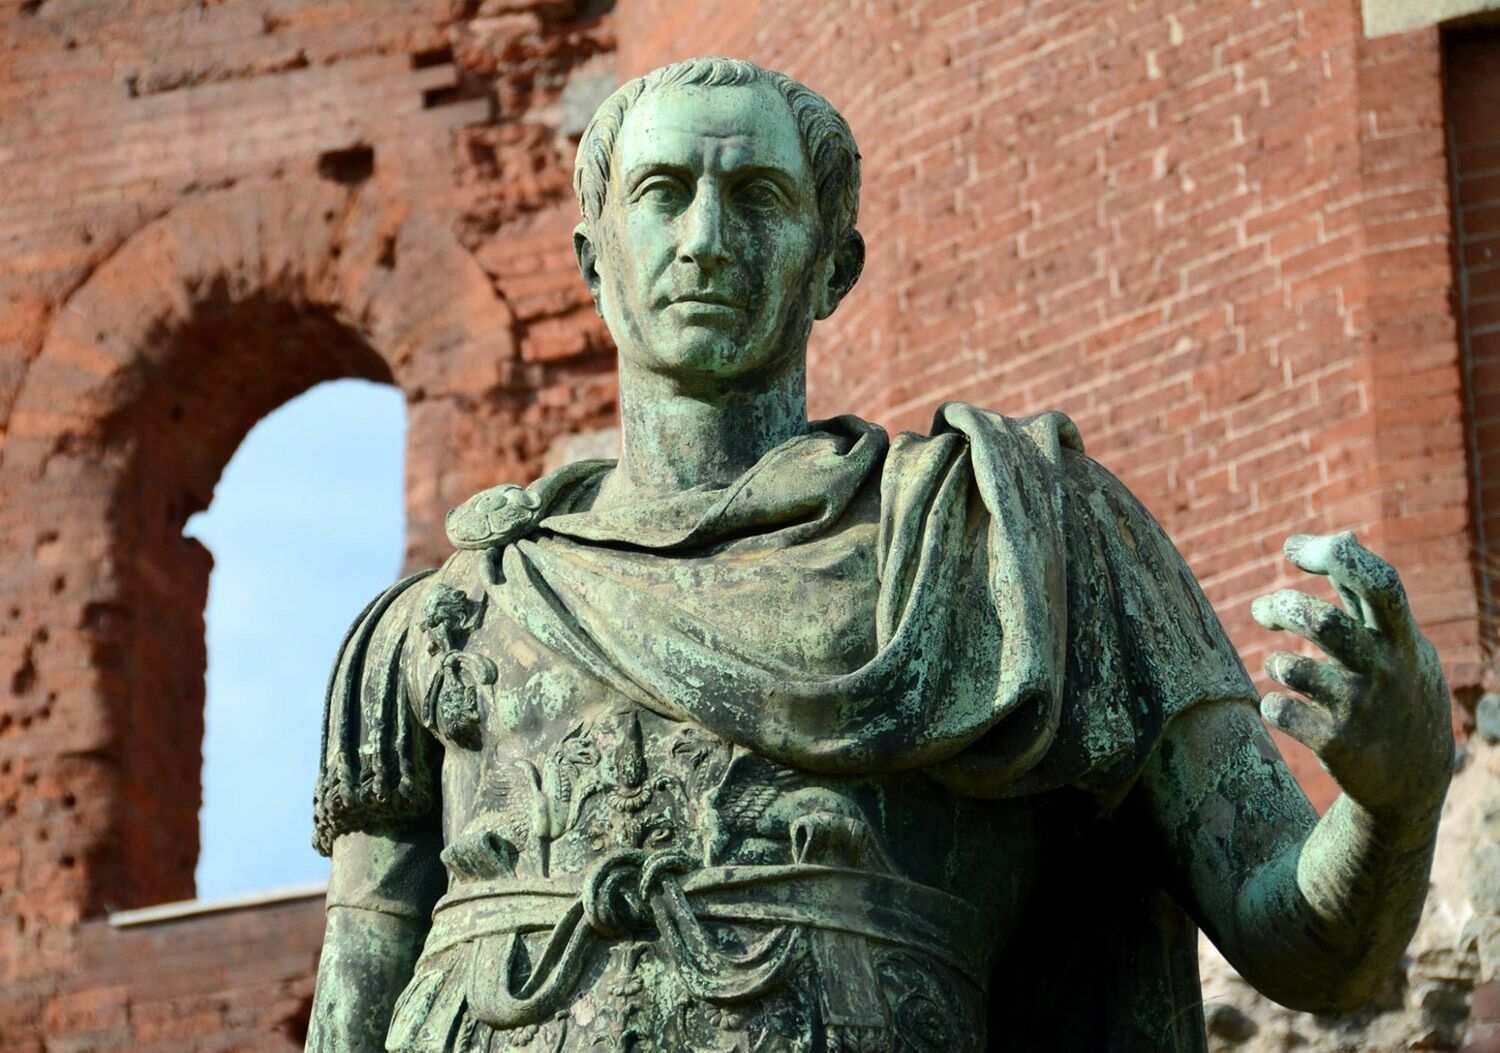 Victory, Failure, and Death of Julius Caesar